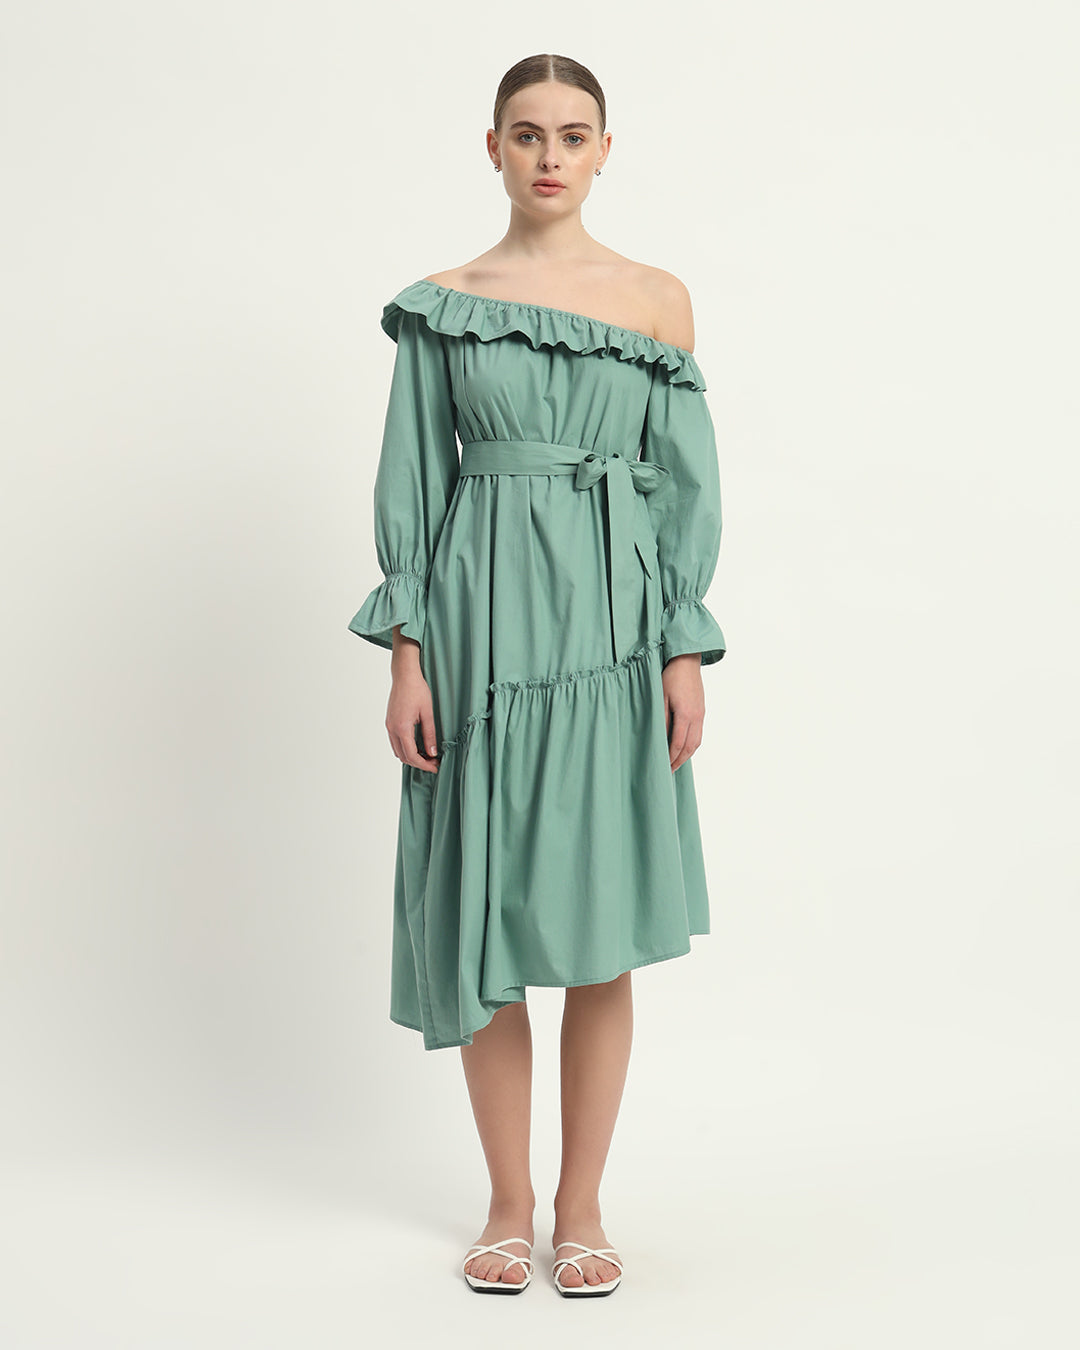 The Stellata Mint Cotton Dress